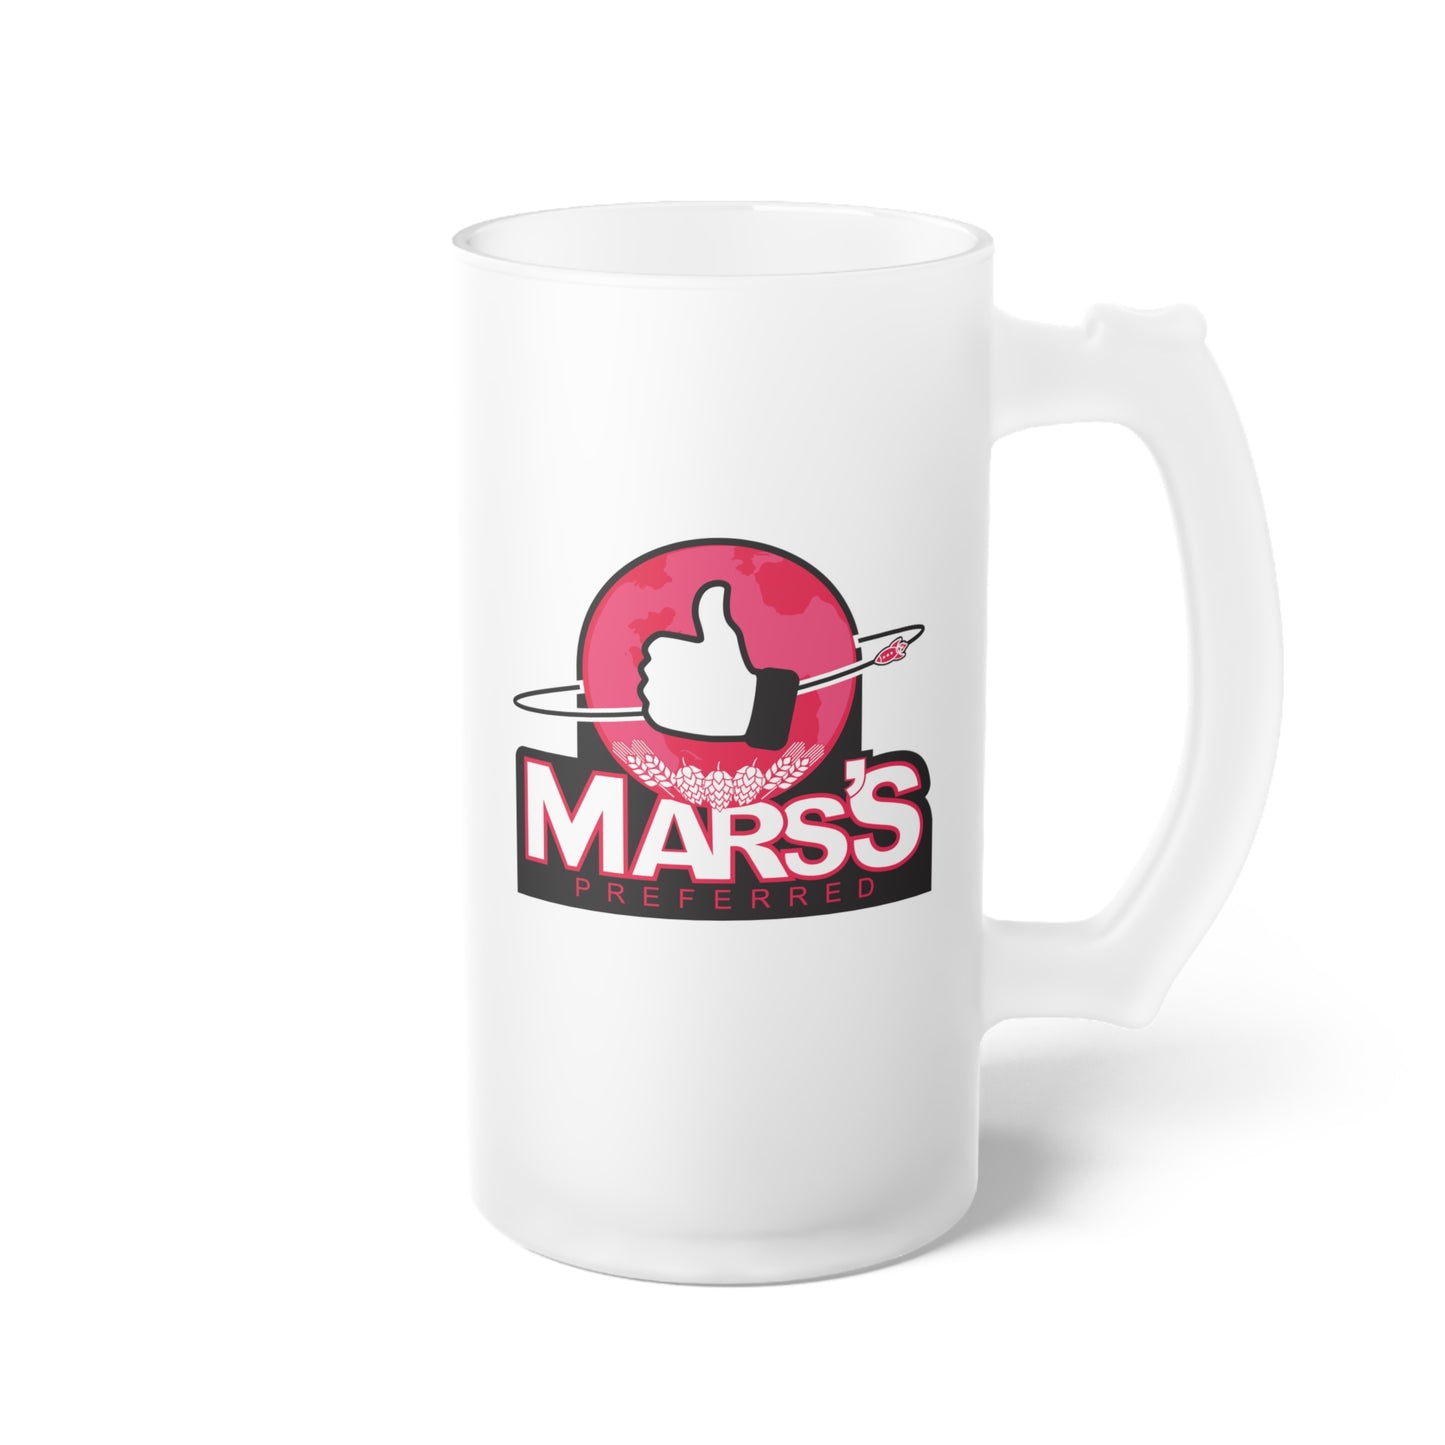 Black Ocean: Mars's Preferred frosted glass beer mug